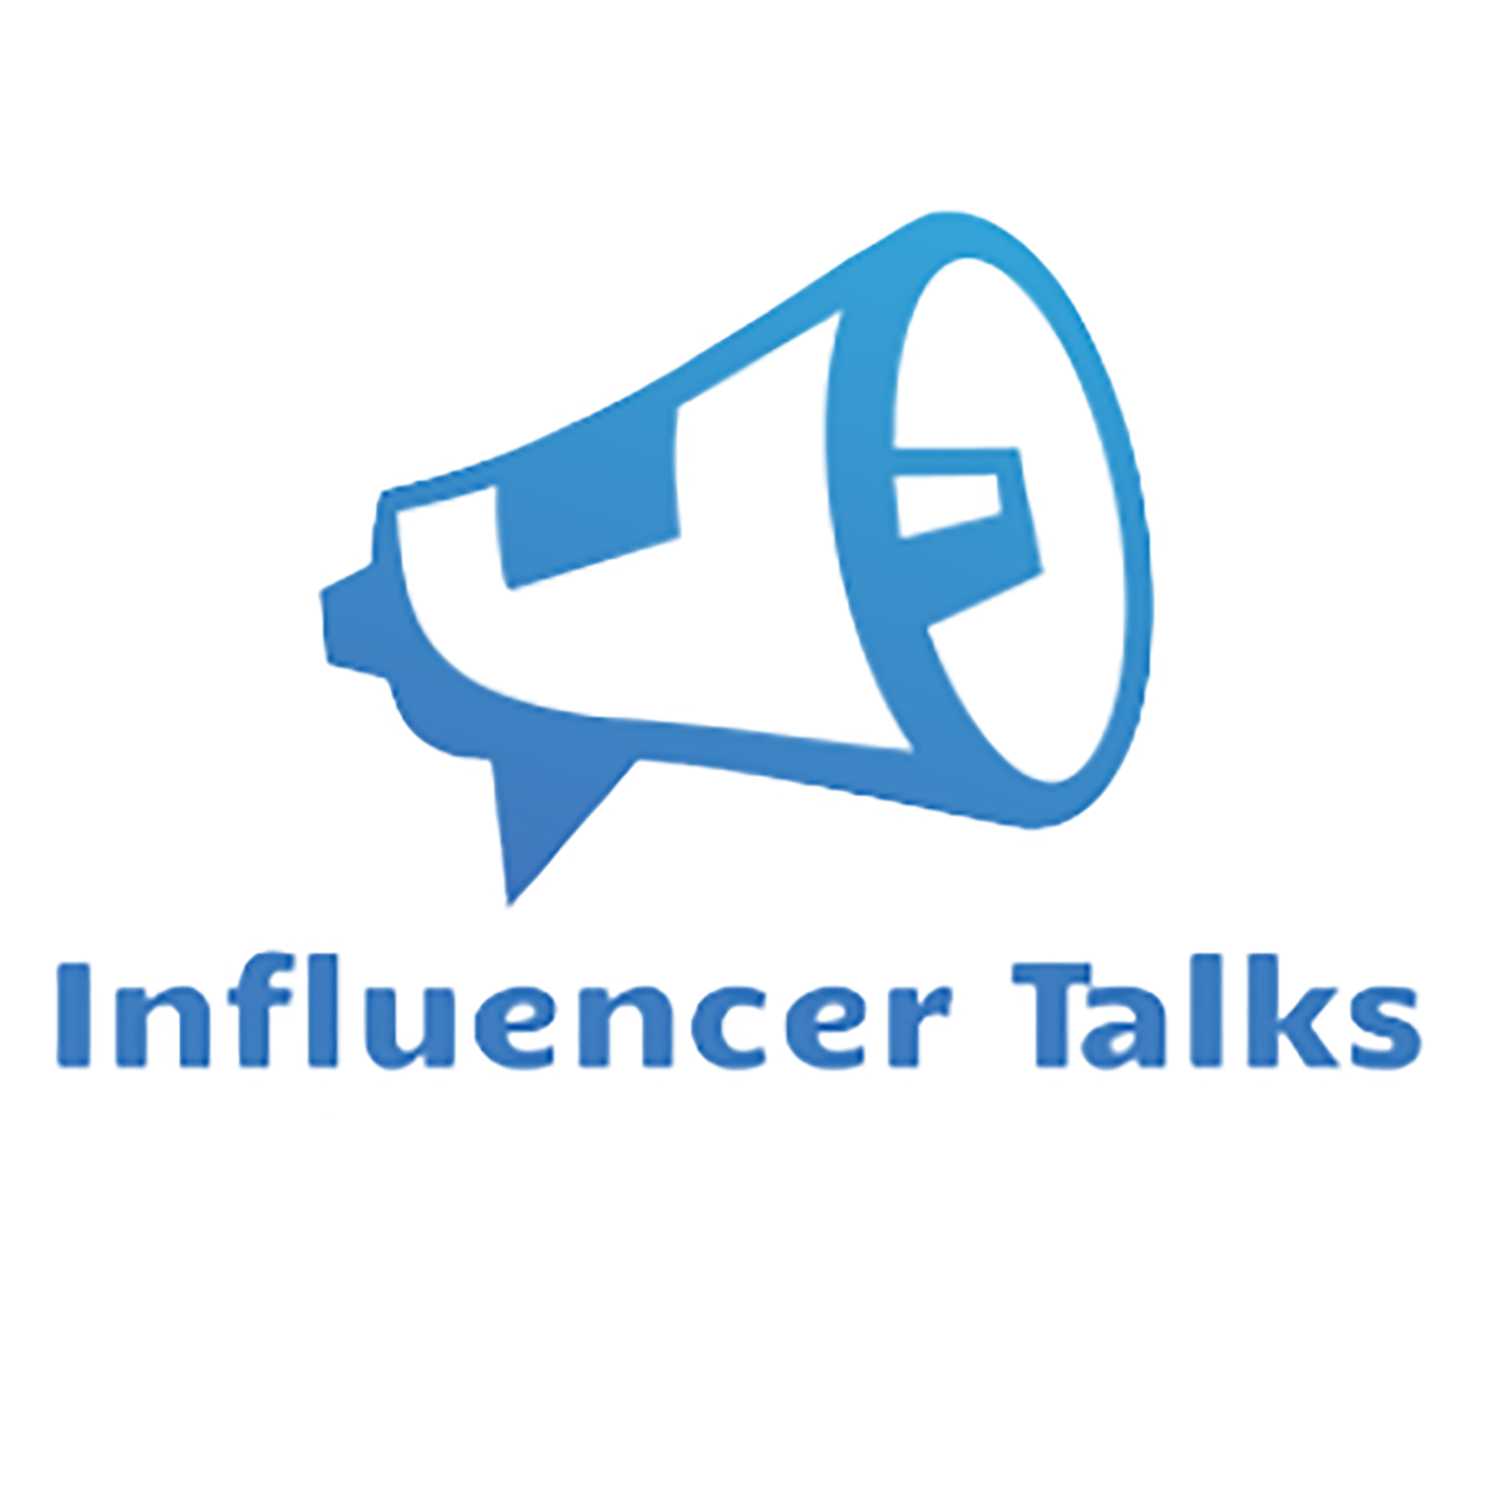 shubham khedkar (nobita) instagram influencer interview | influencer talks